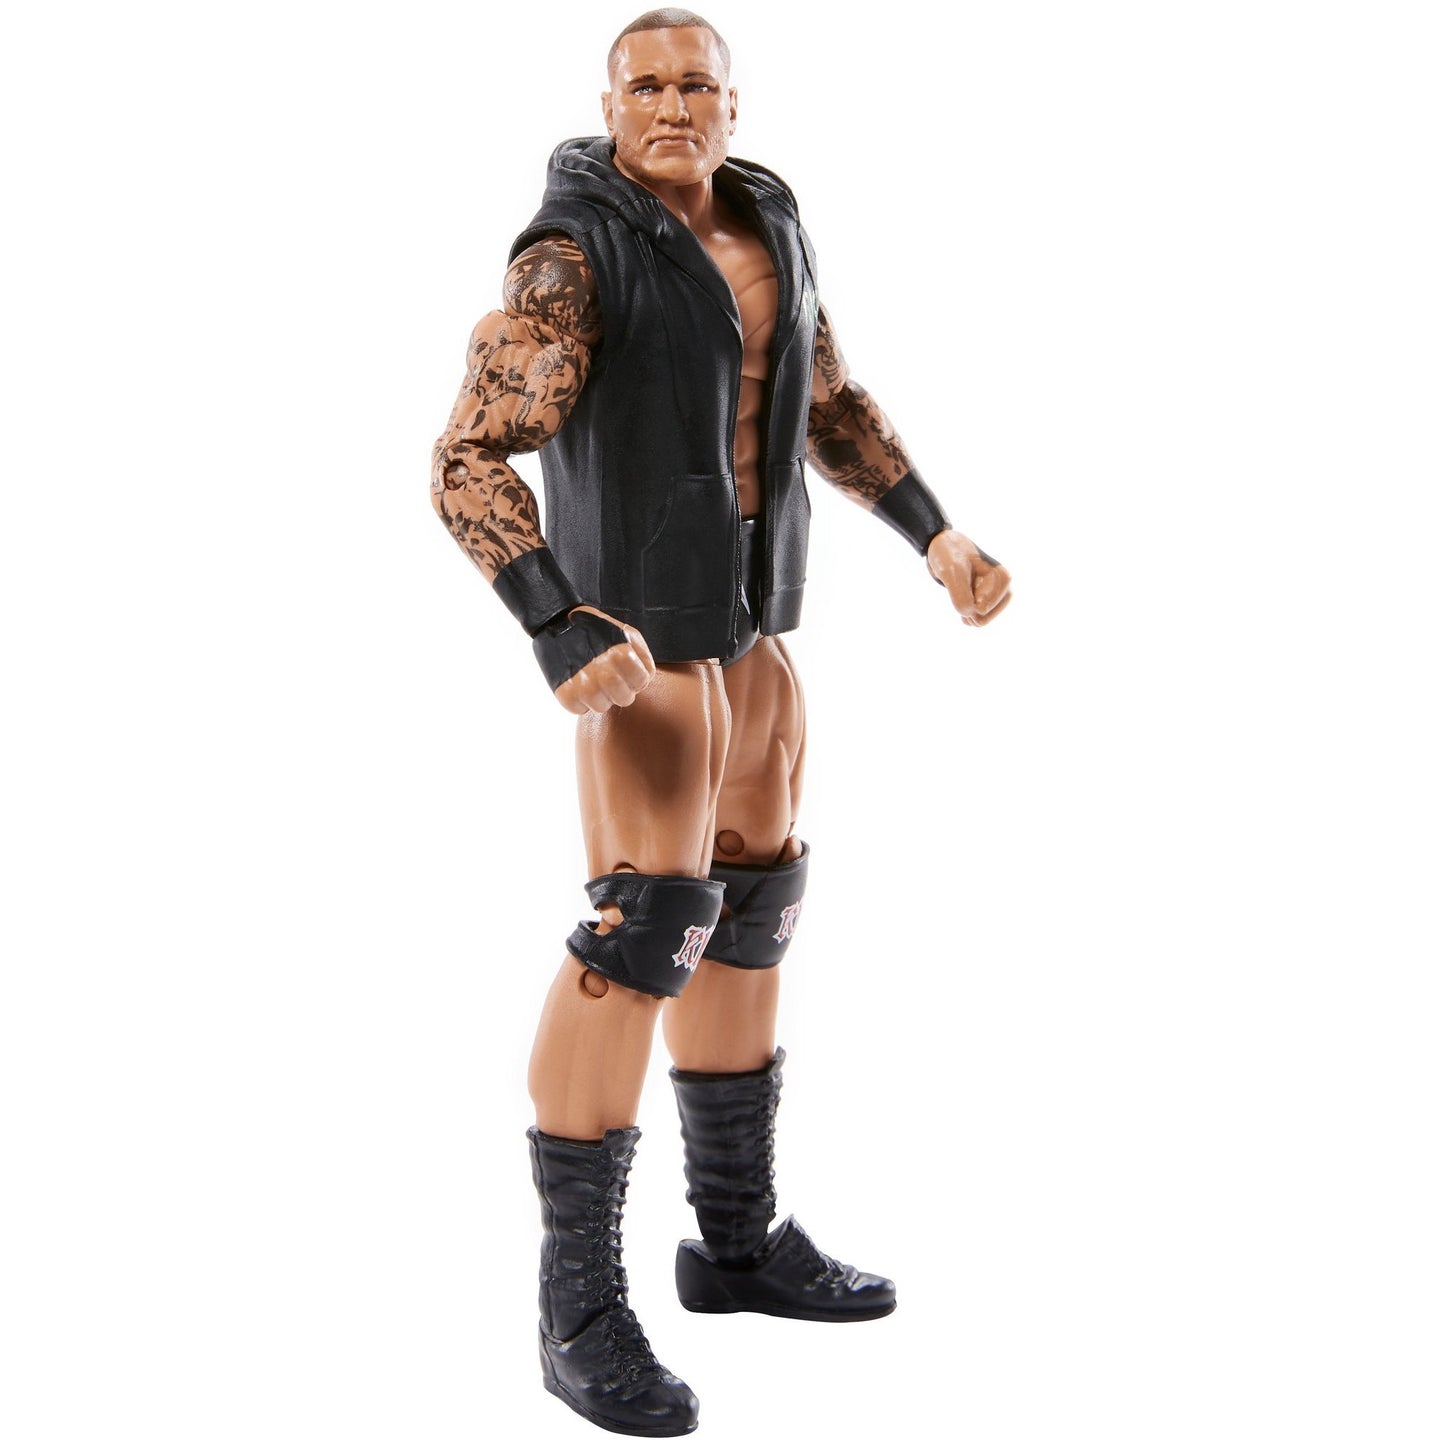 WWE Mattel Elite Collection Series 78 Randy Orton